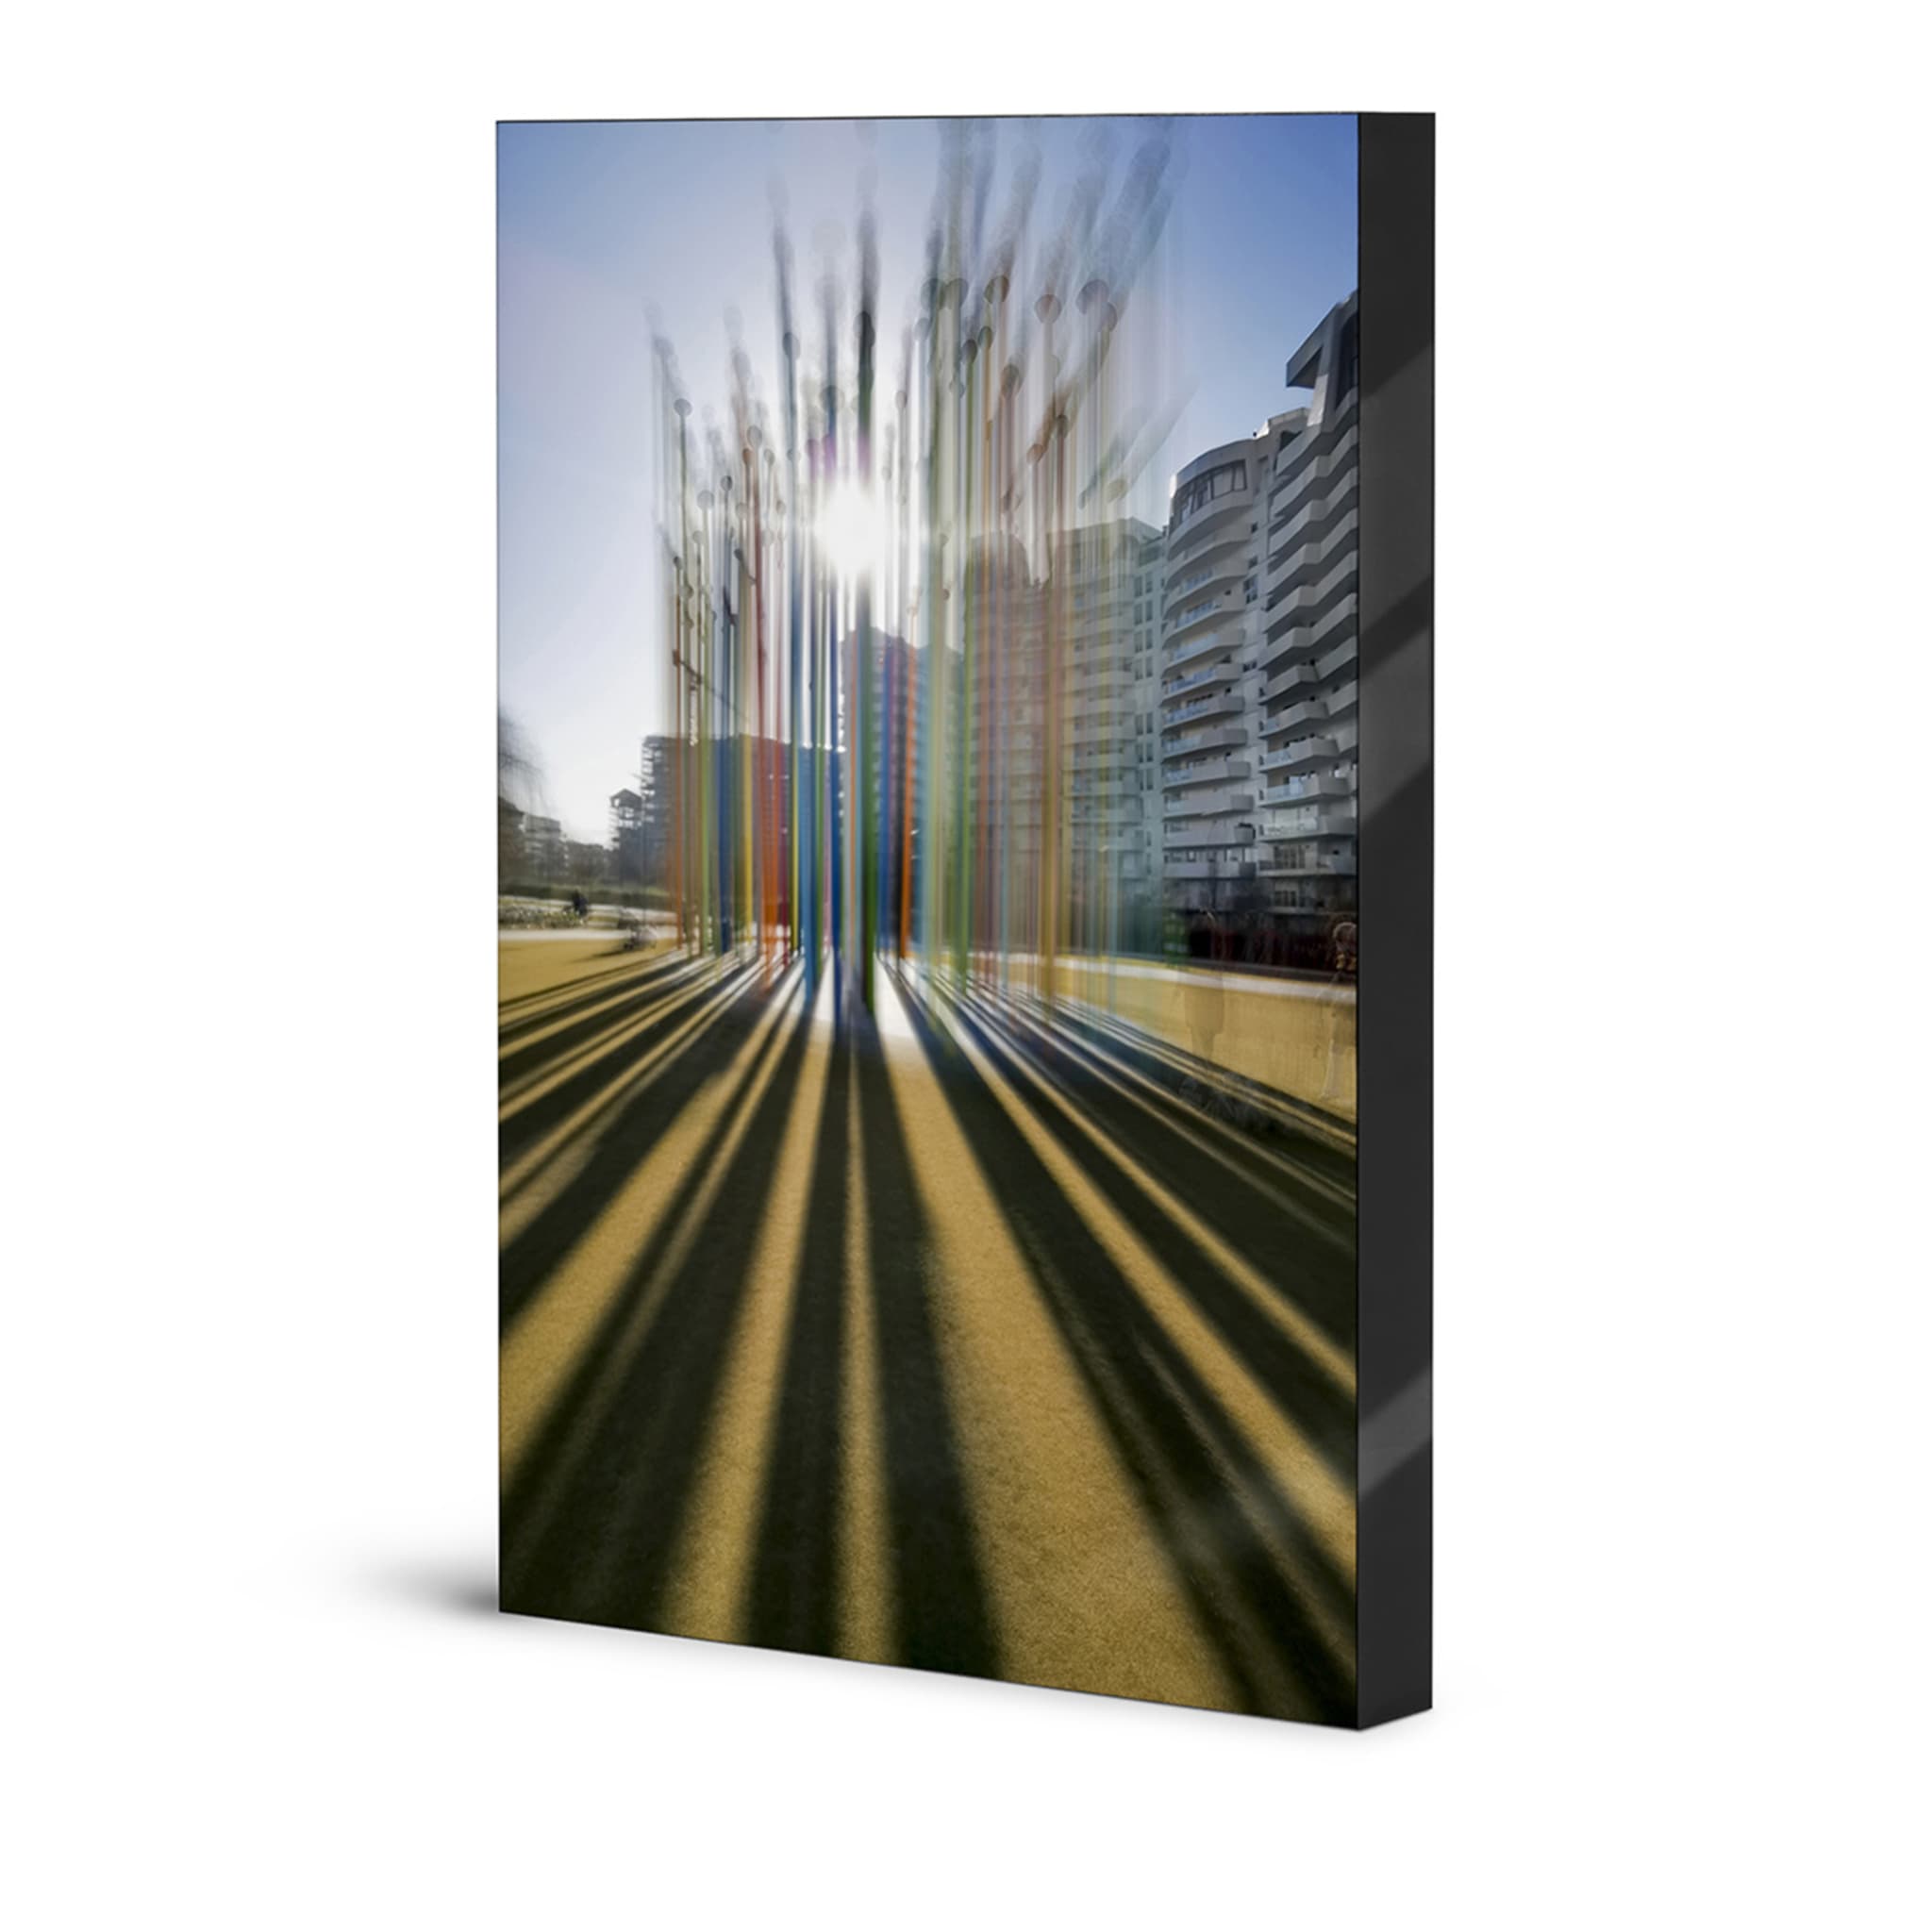 NCD-SLV08 Photographic Lumaframe® Panel by S. Lombardi Vallauri - Alternative view 1